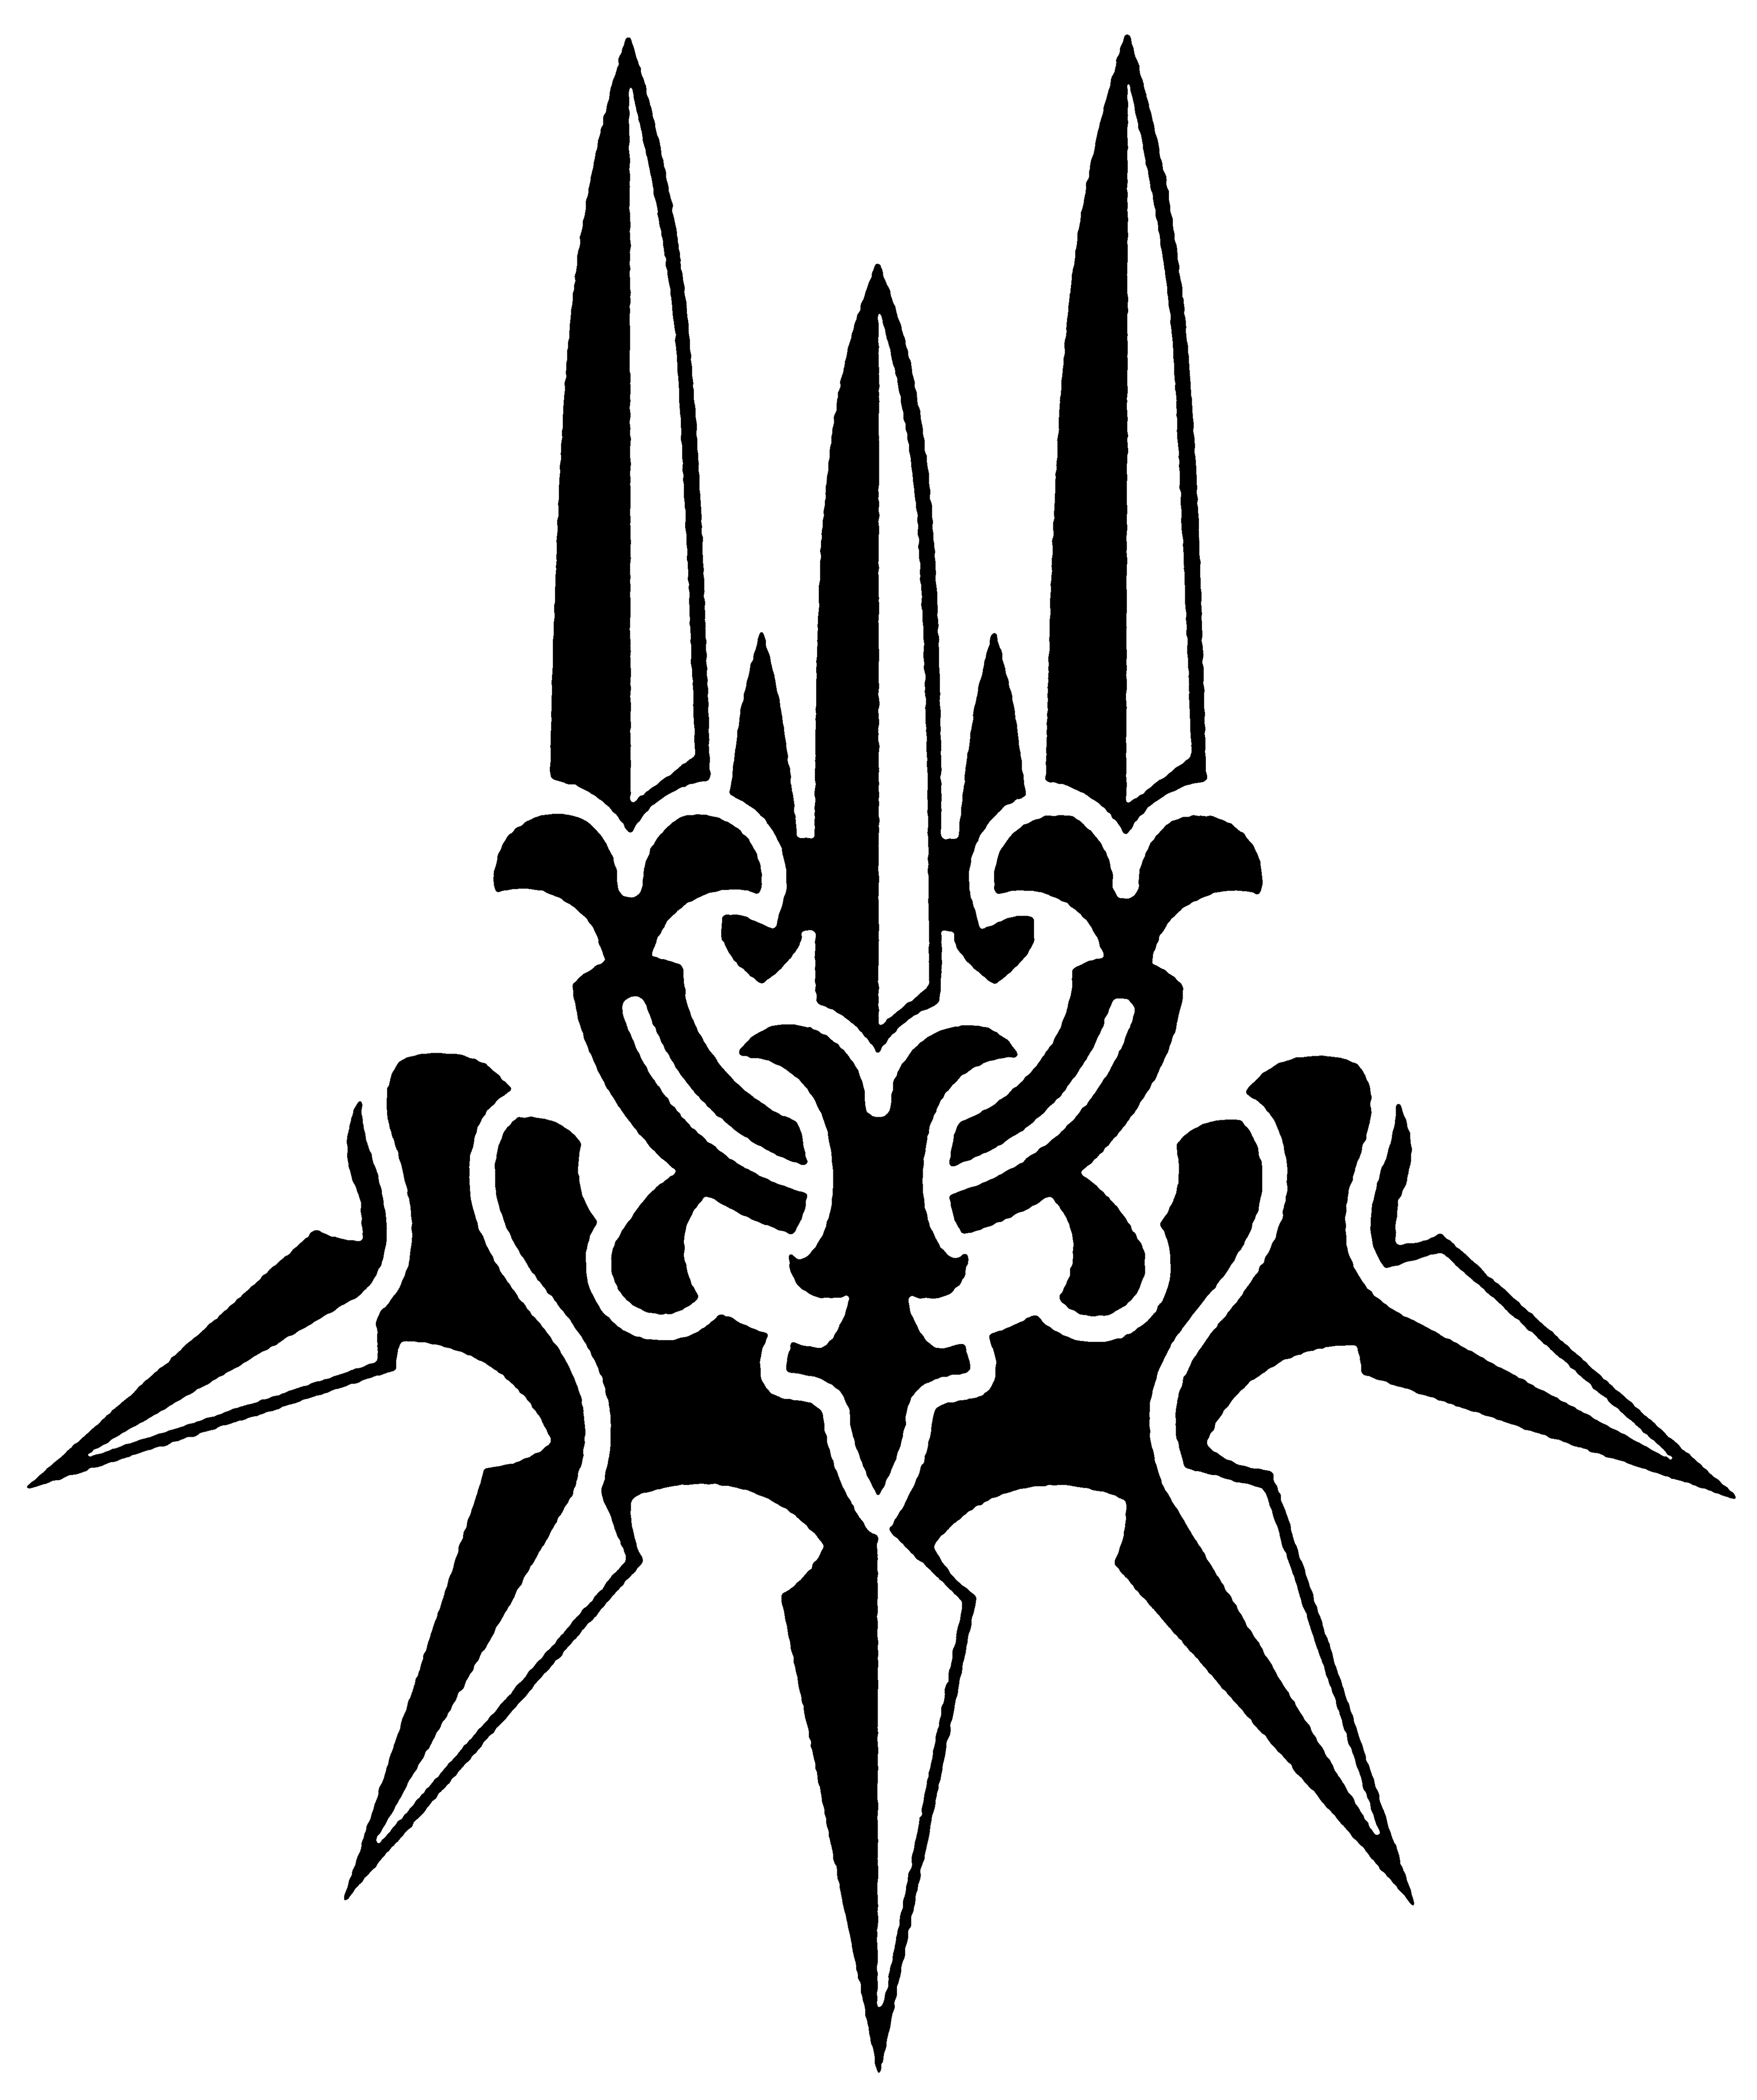 Logo,Black-and-white,Symmetry,Graphics